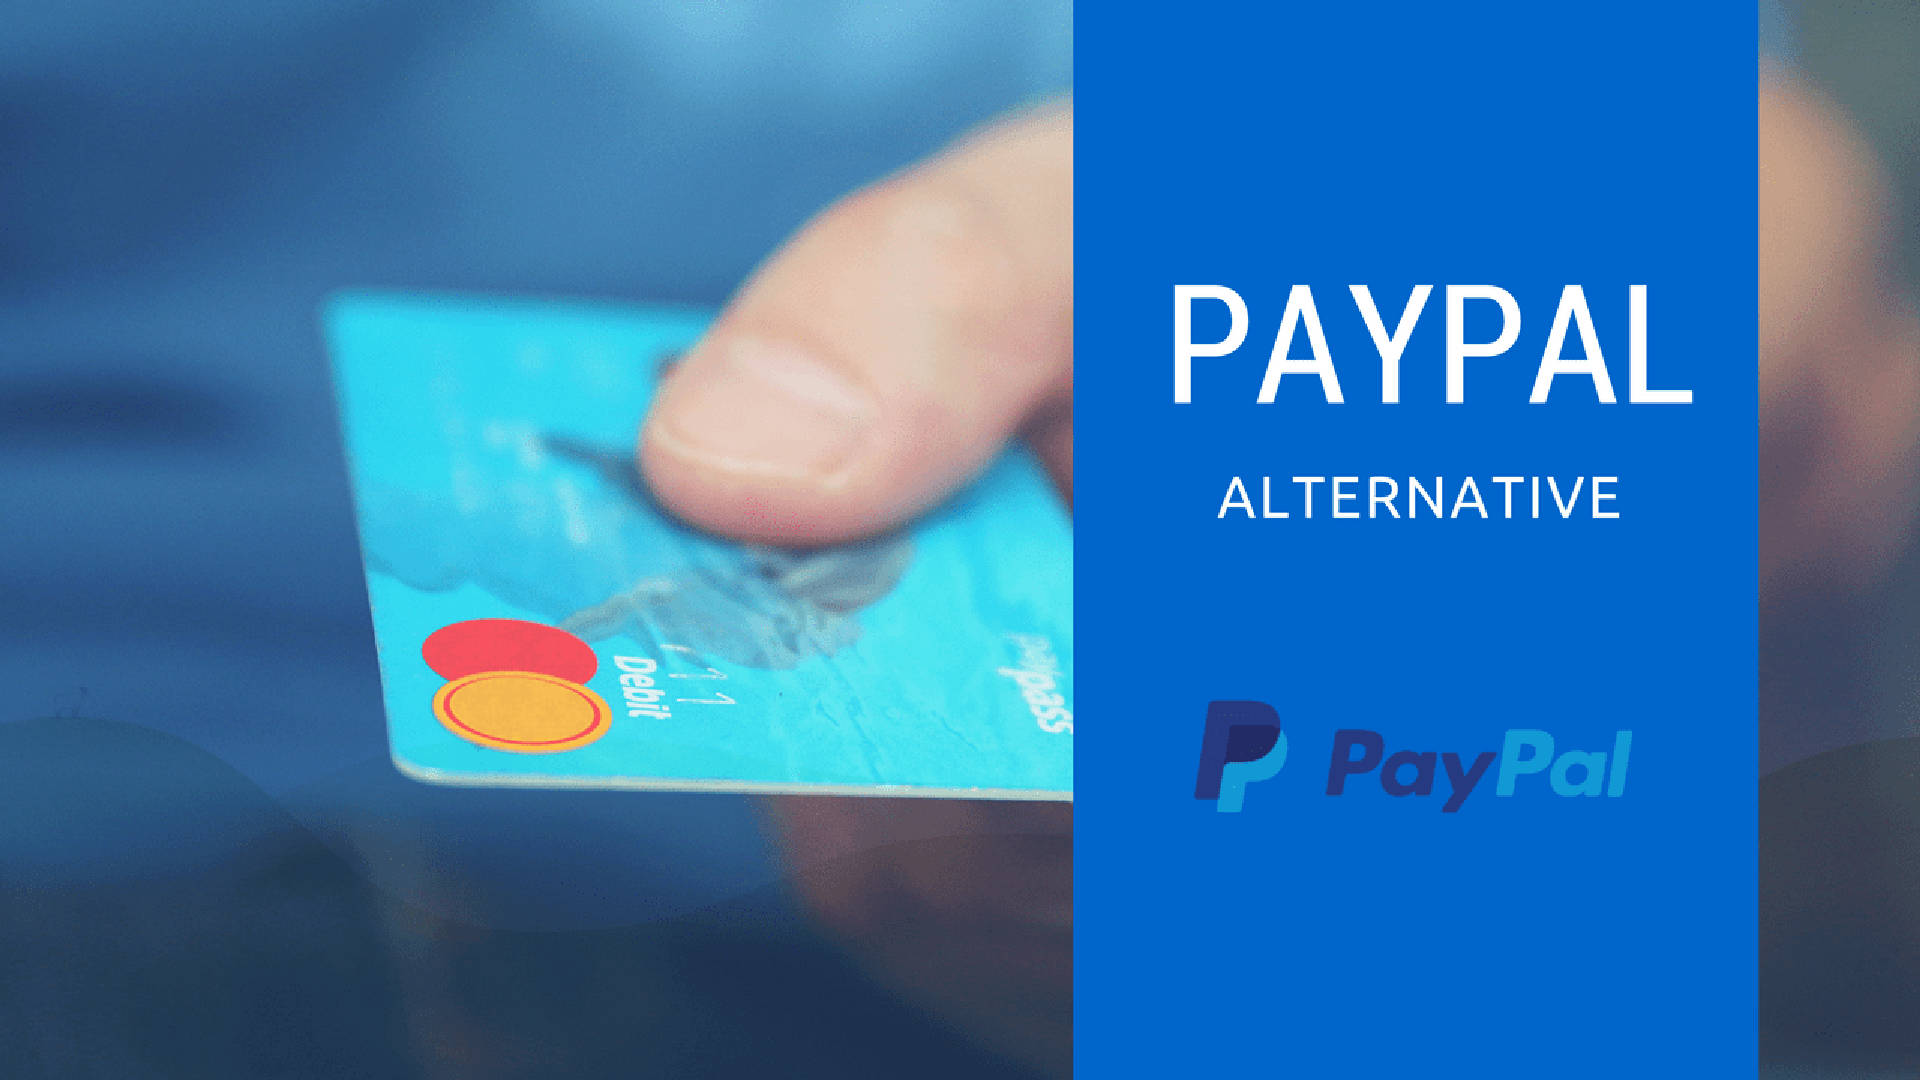 Paypal Alternative Design Background